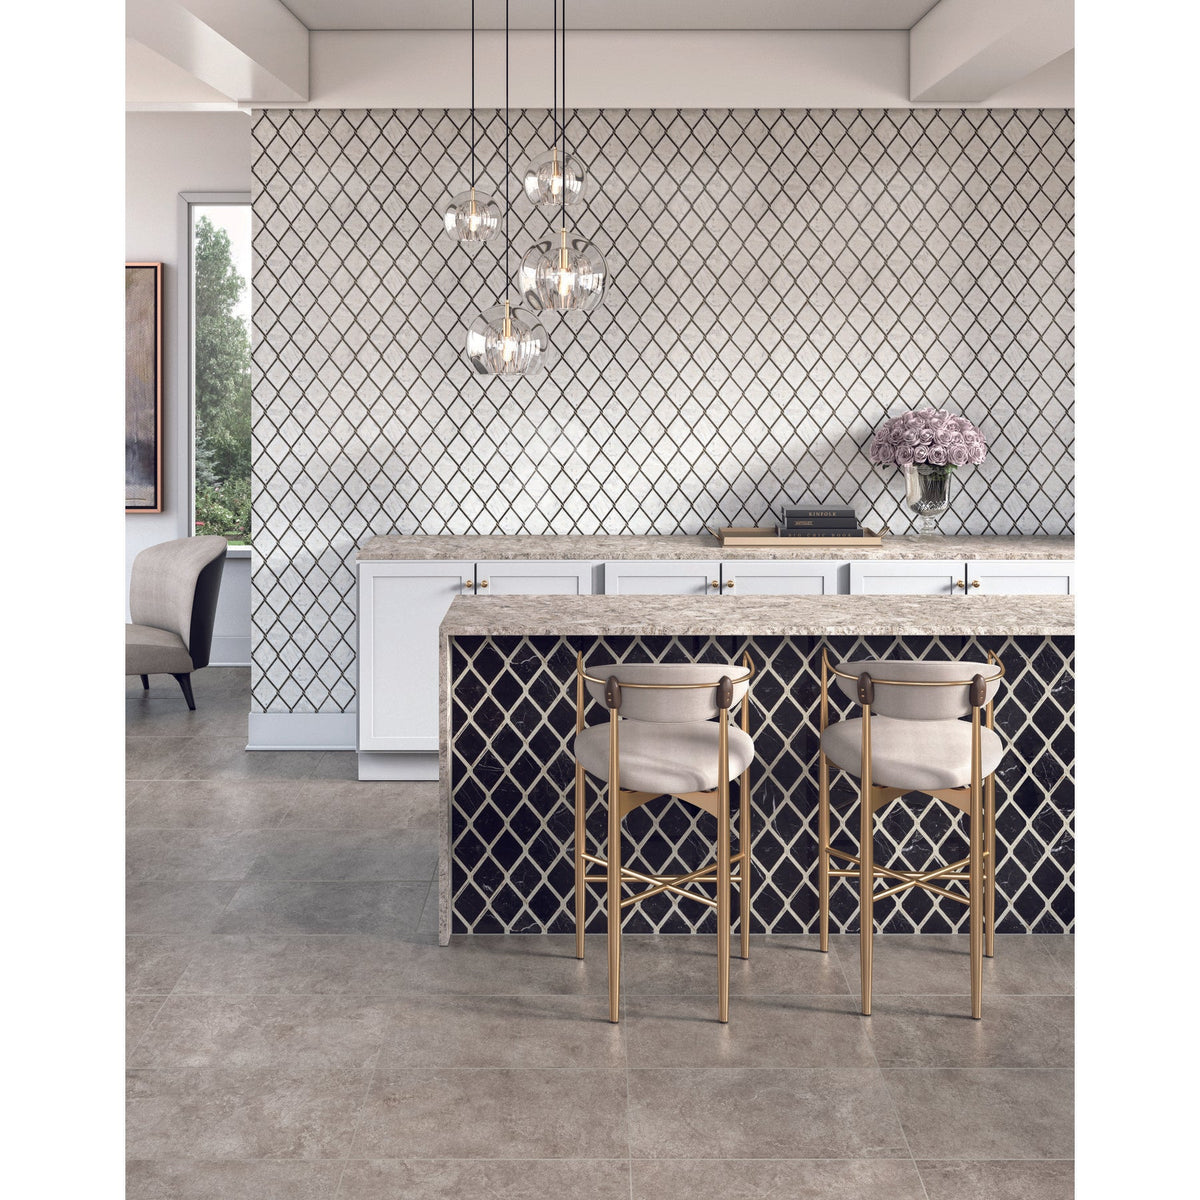 Daltile - Rhetoric - 12 in. x 24 in. Glazed Porcelain Tile - Eloquent Grey Grid Install